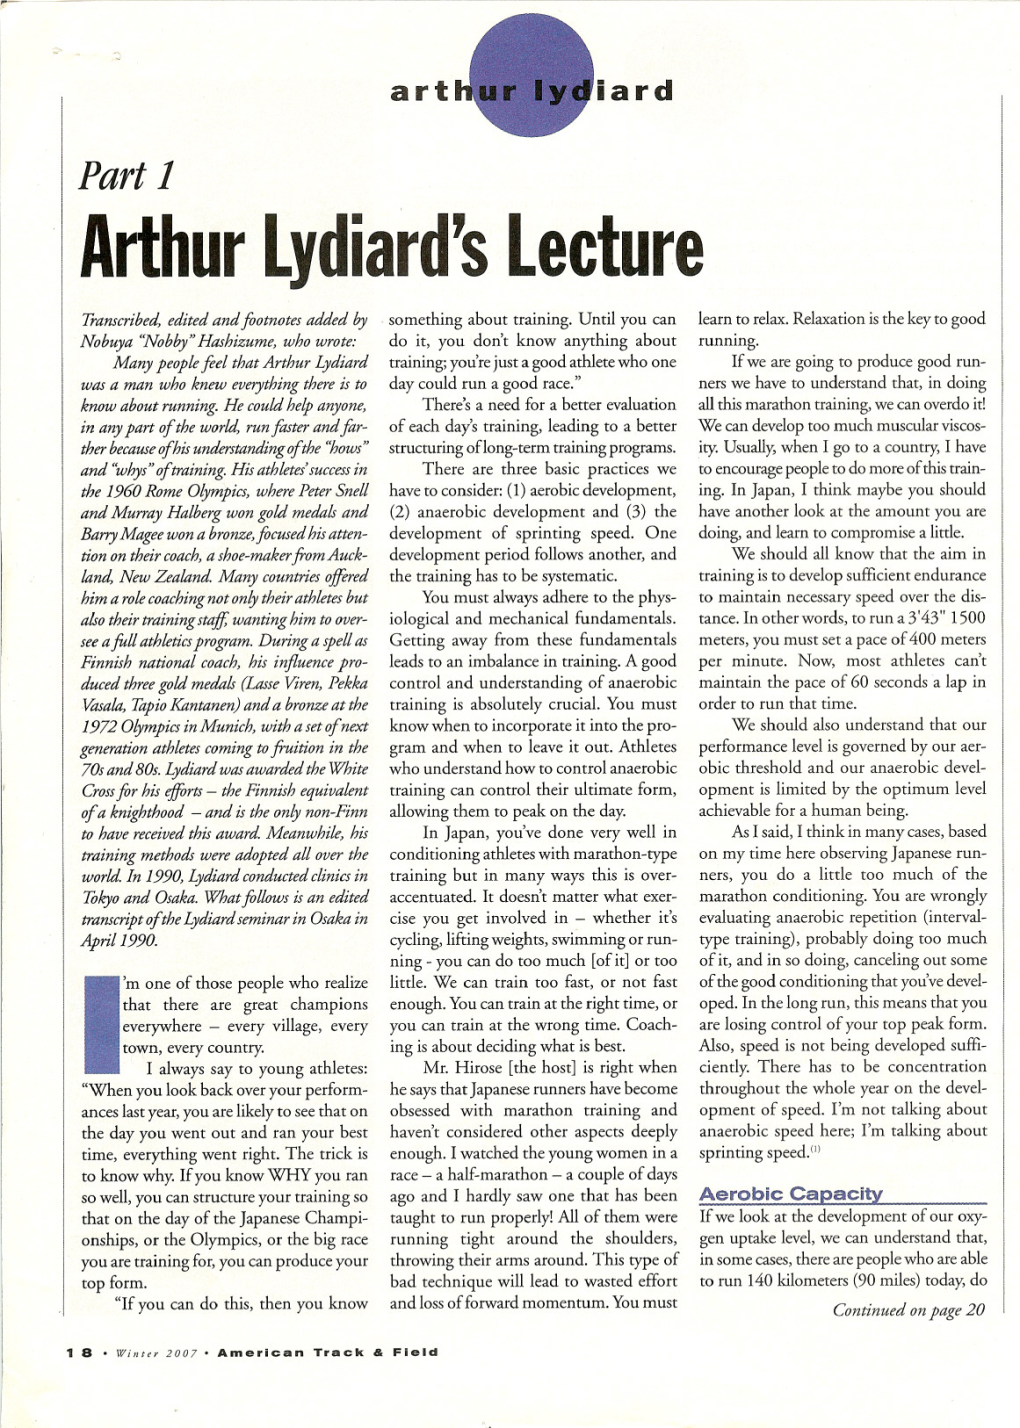 Arthur Lydiard's Lecture